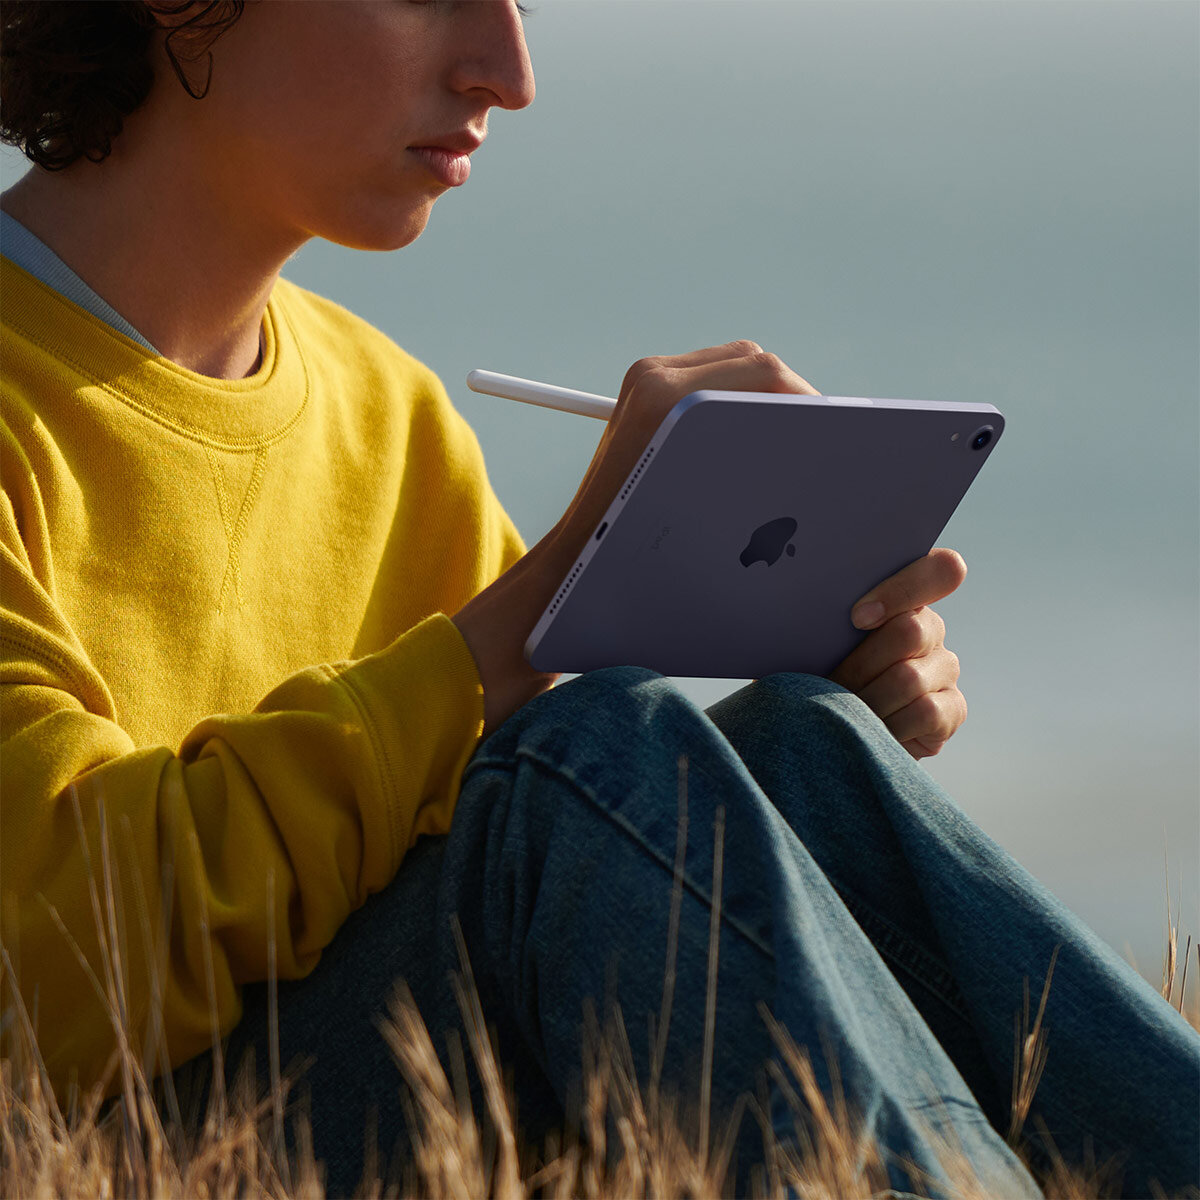 Buy Apple iPad mini 6th Gen, 8.3 Inch, WiFi, 64GB in Starlight, MK7P3B/A at costco.co.uk